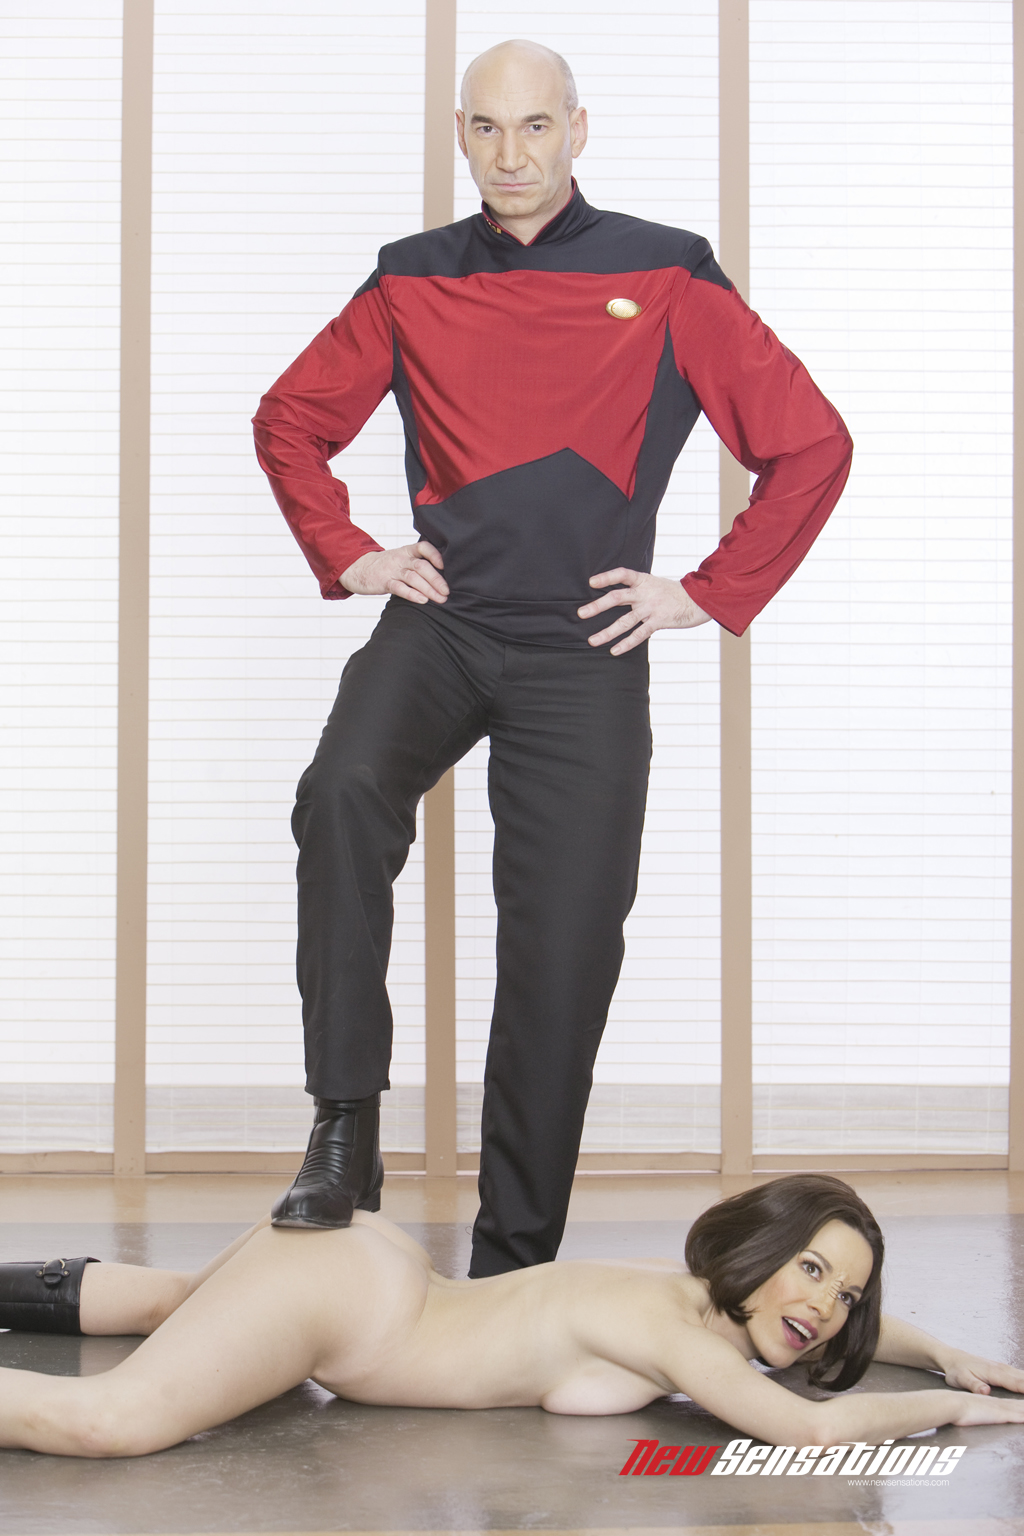 Trek a parody star next the generation xxx Star Trek: